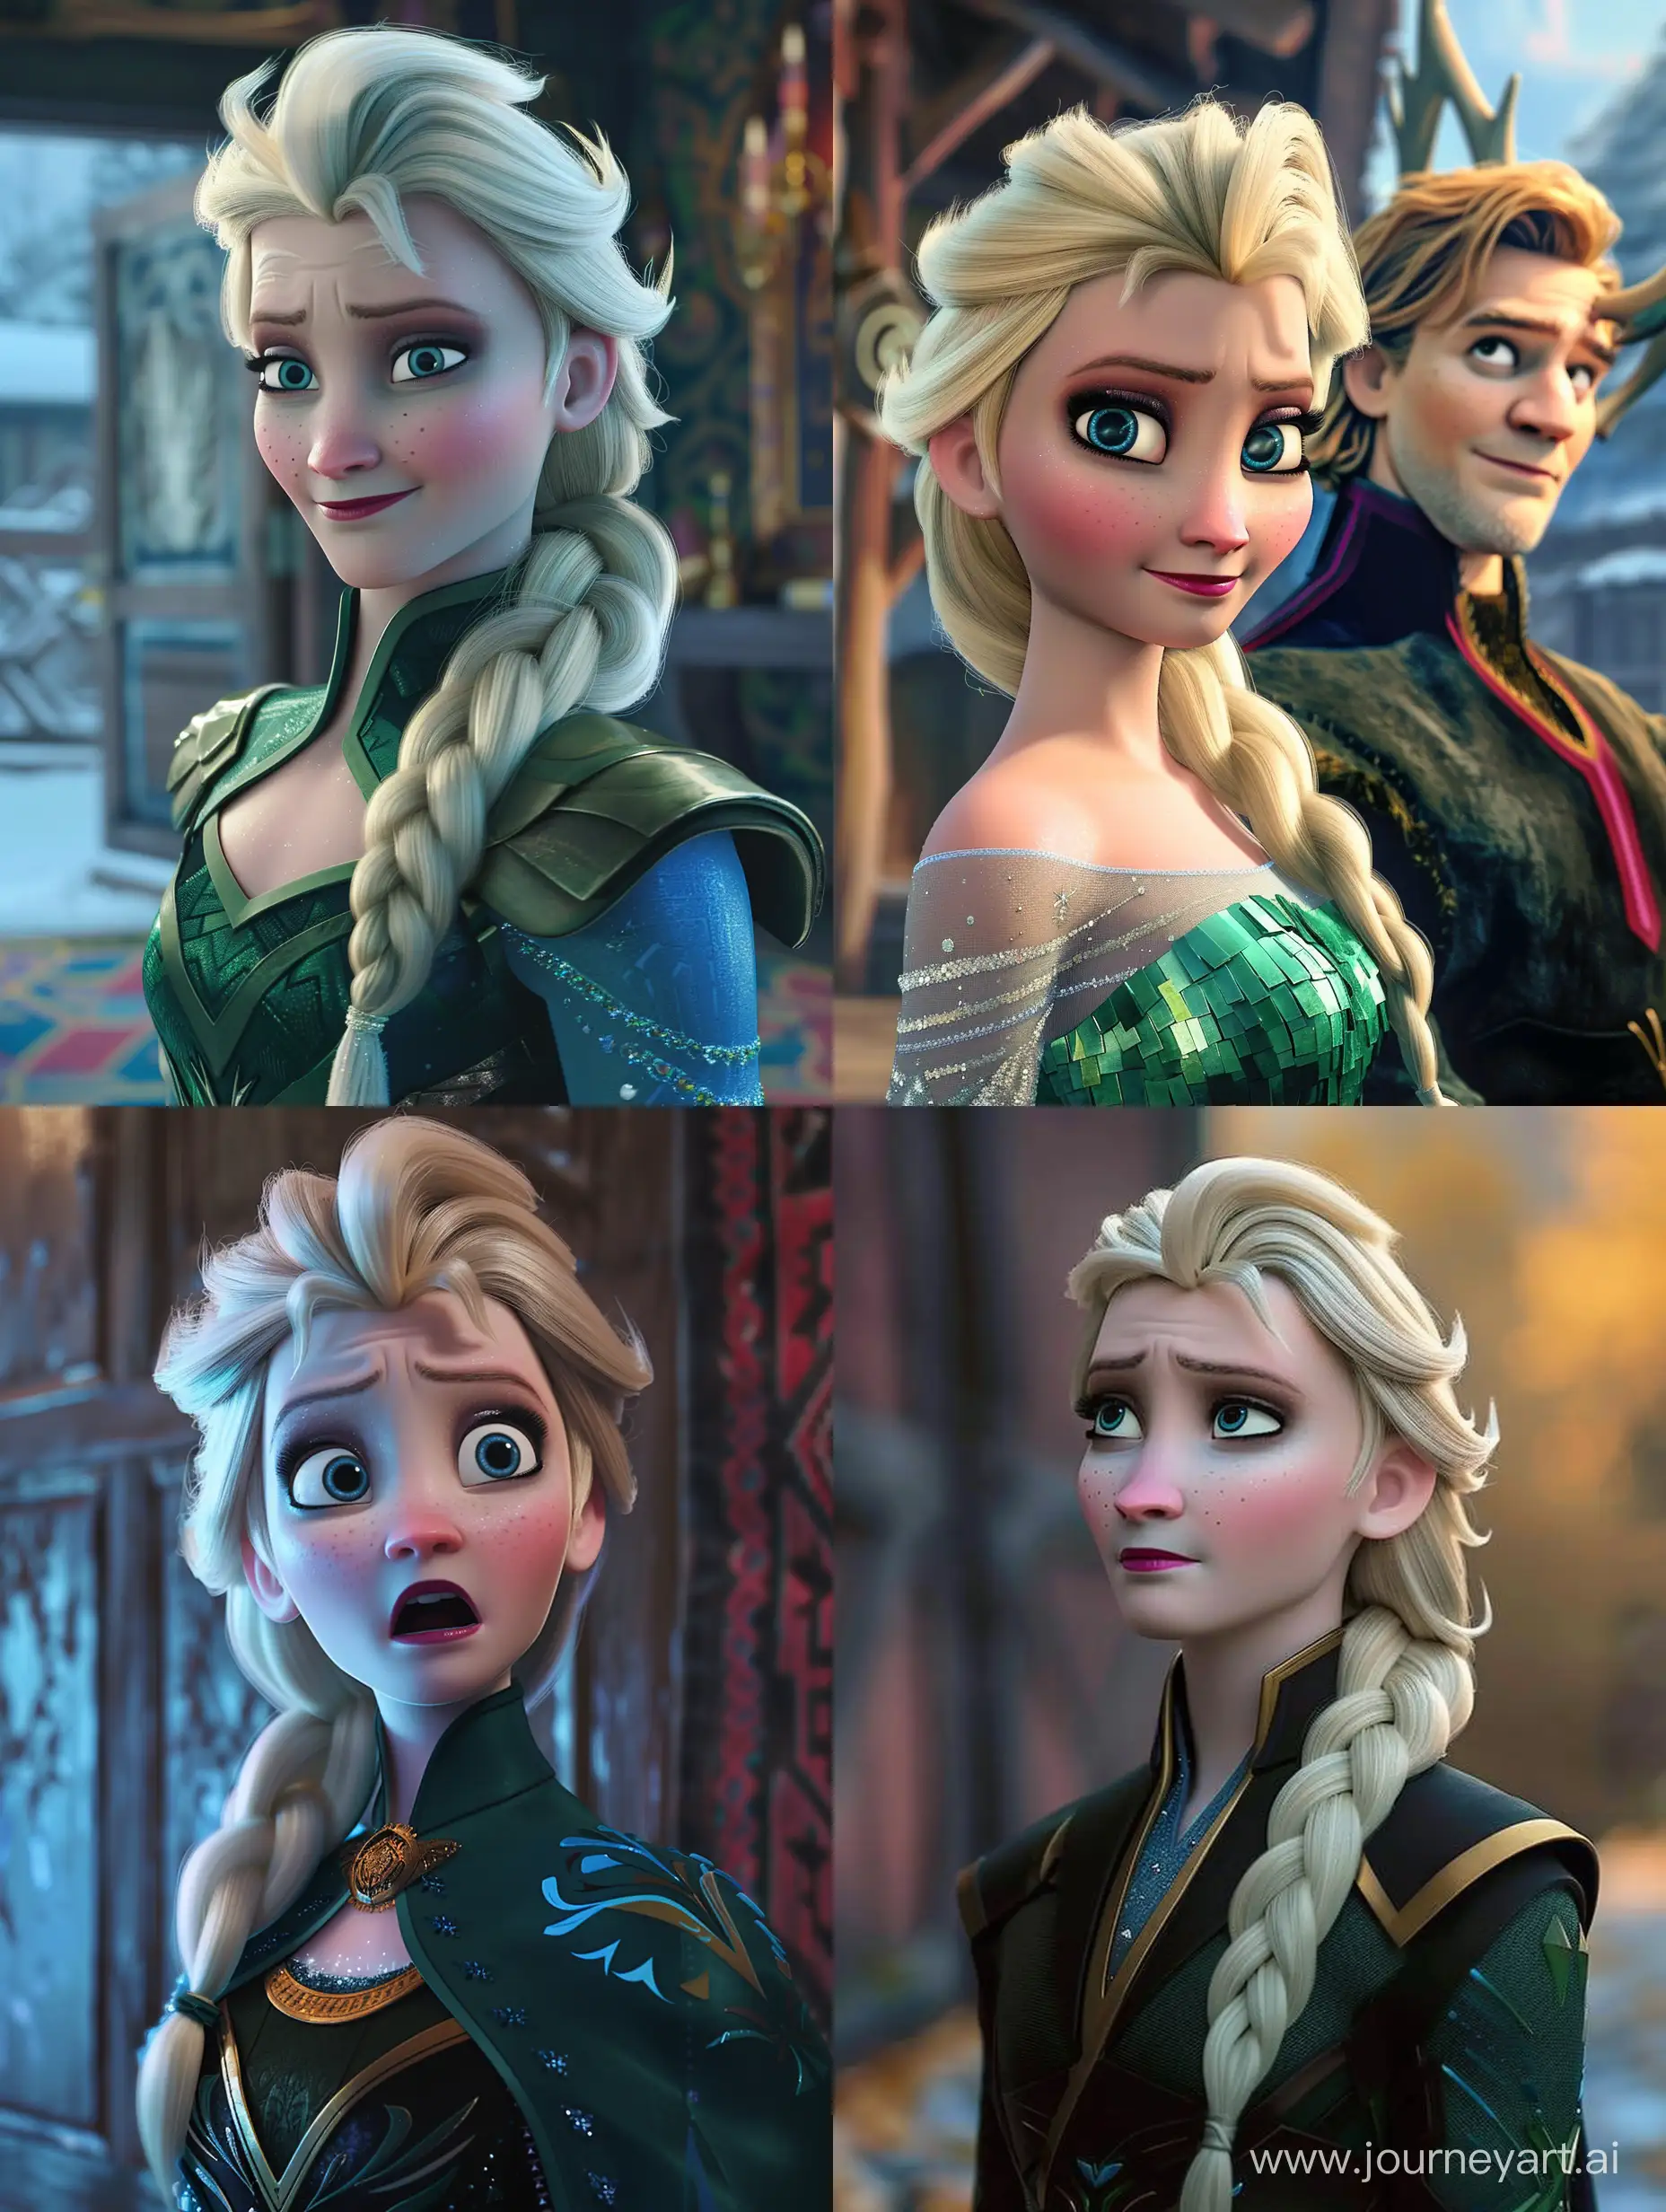 Elsa from Frozen checking out on Tom Hiddleston/Loki